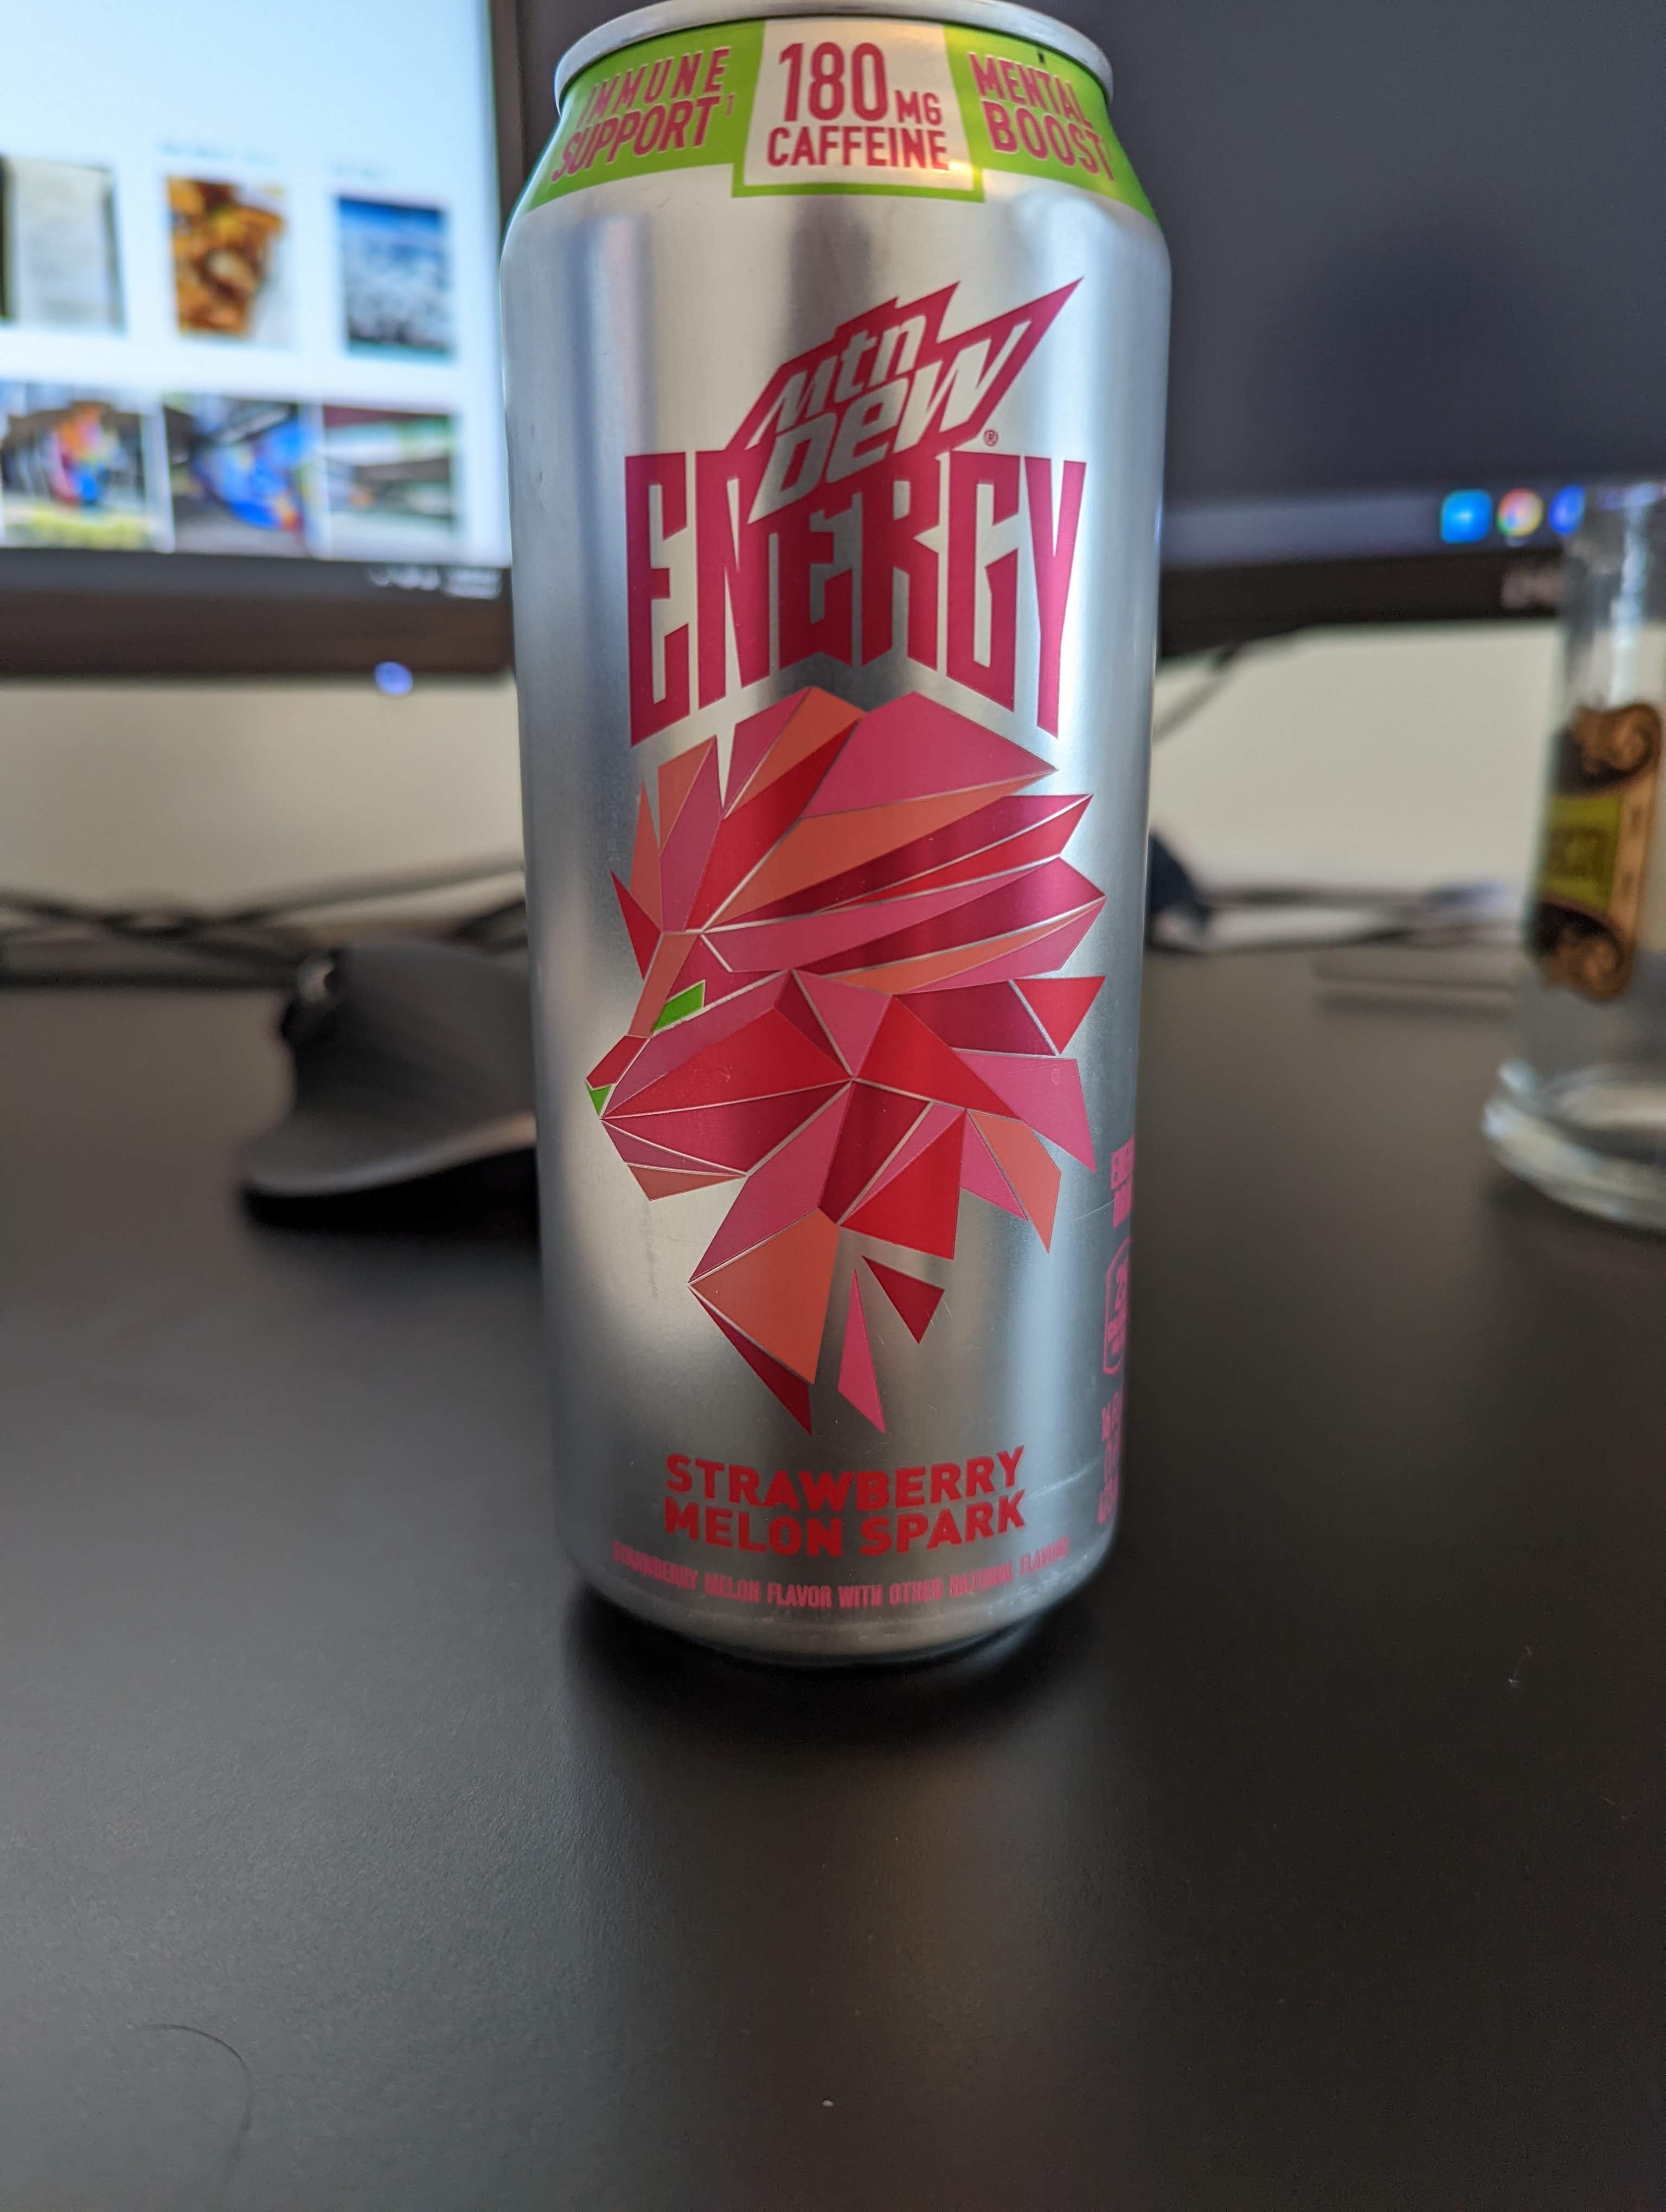 mountaindew-energy-strawberrymelon.jpg